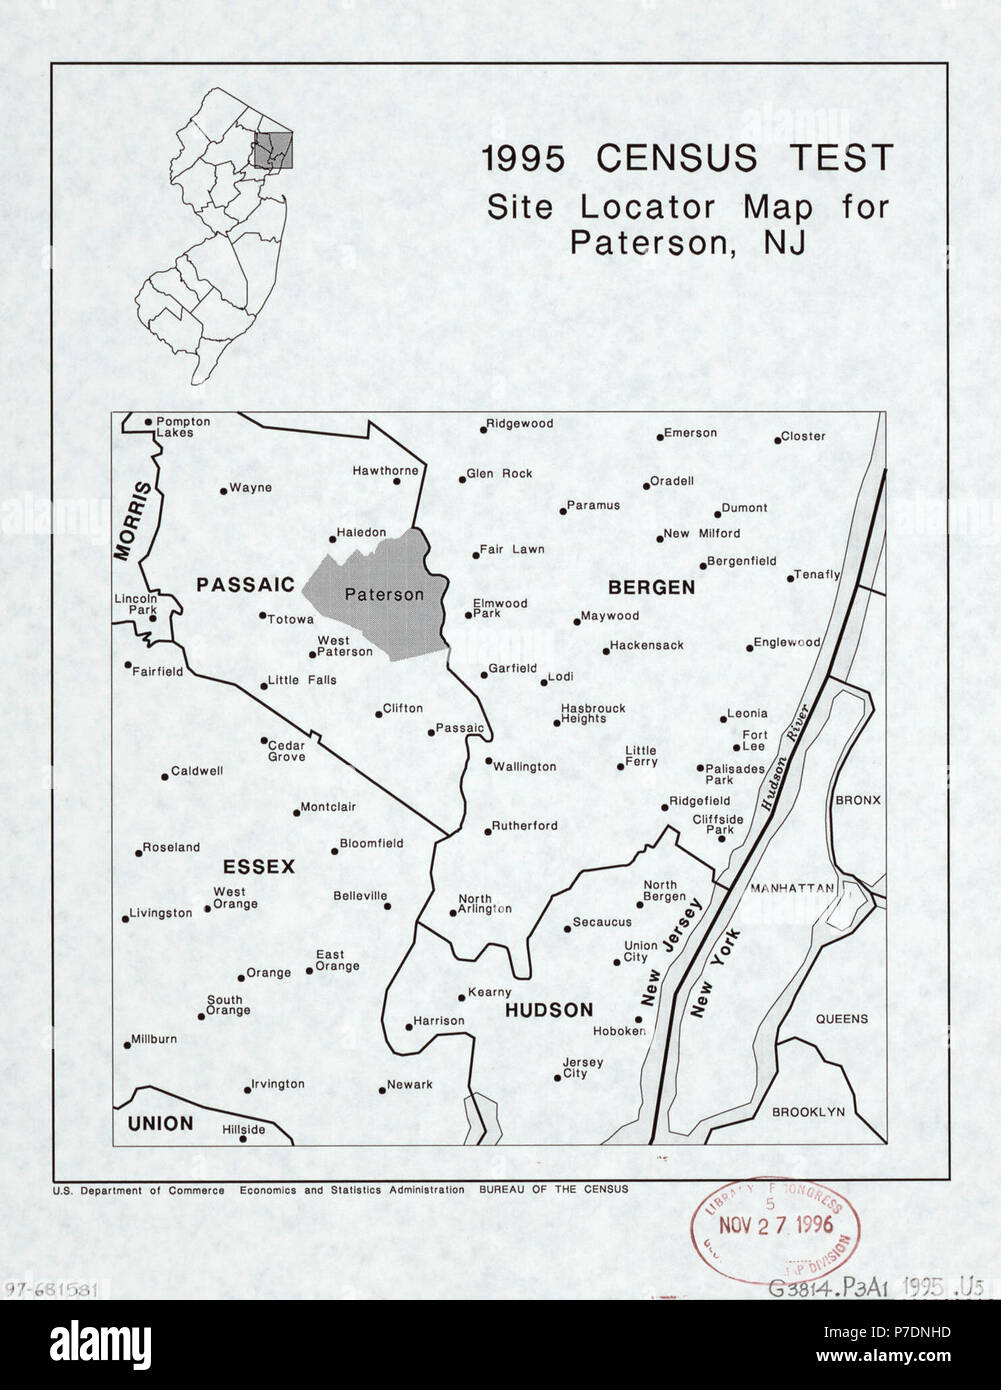 1995 census test site locator map for Paterson, NJ LOC 97681581. Stock Photo